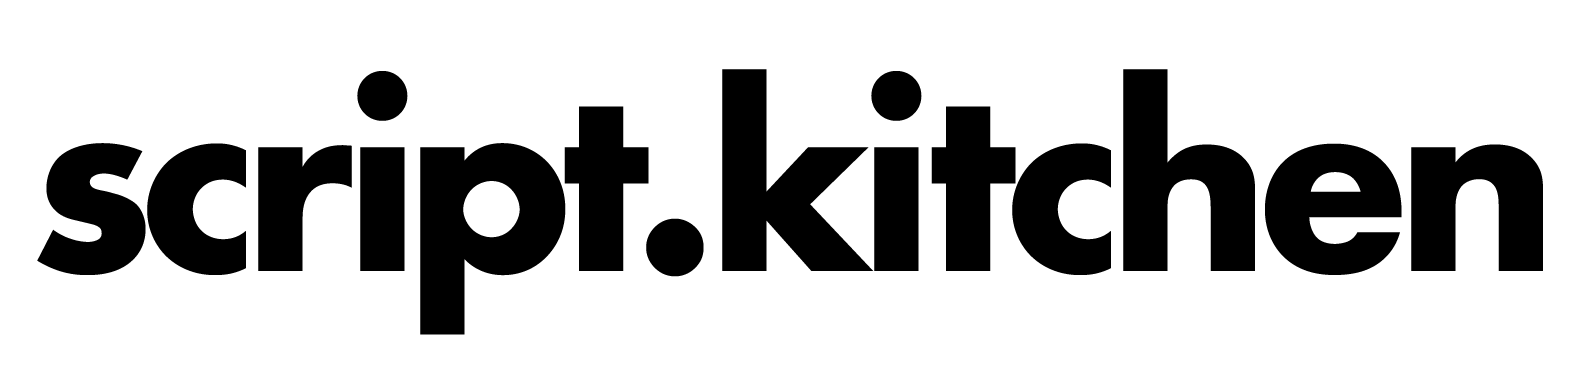 script-kitchen-logo